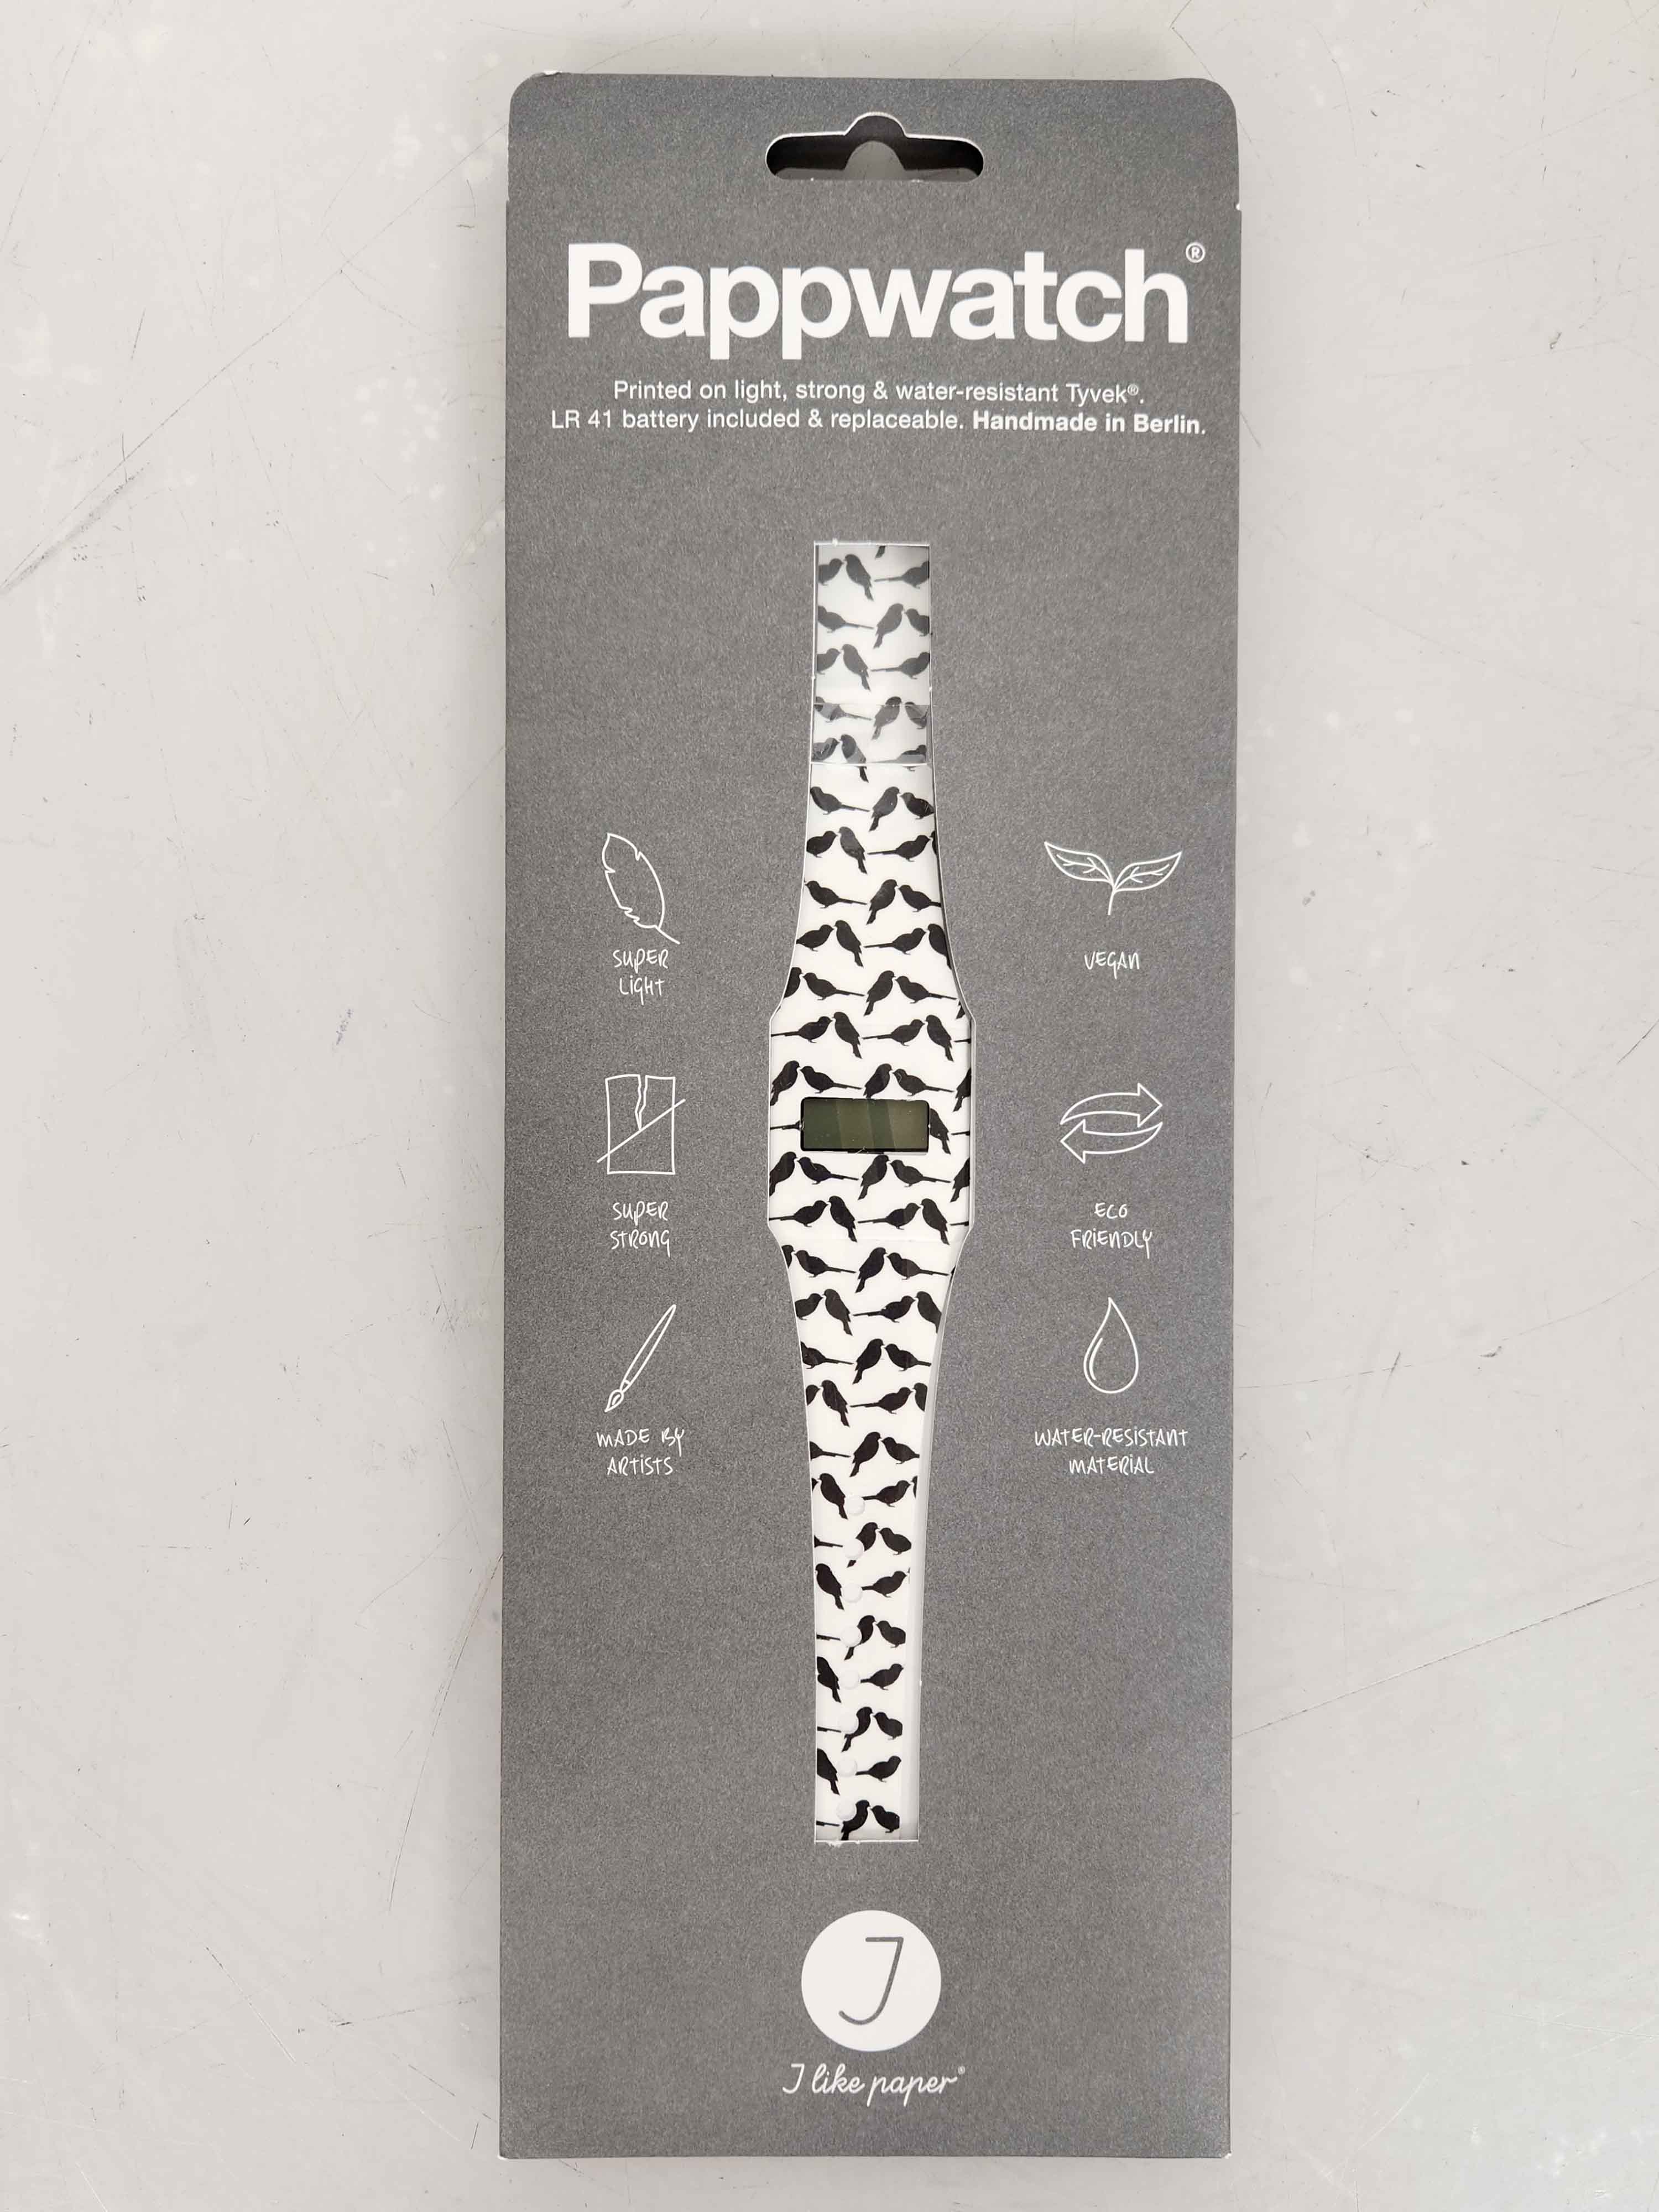 Pappwatch "Black Sparrow" Digital Paper Watch